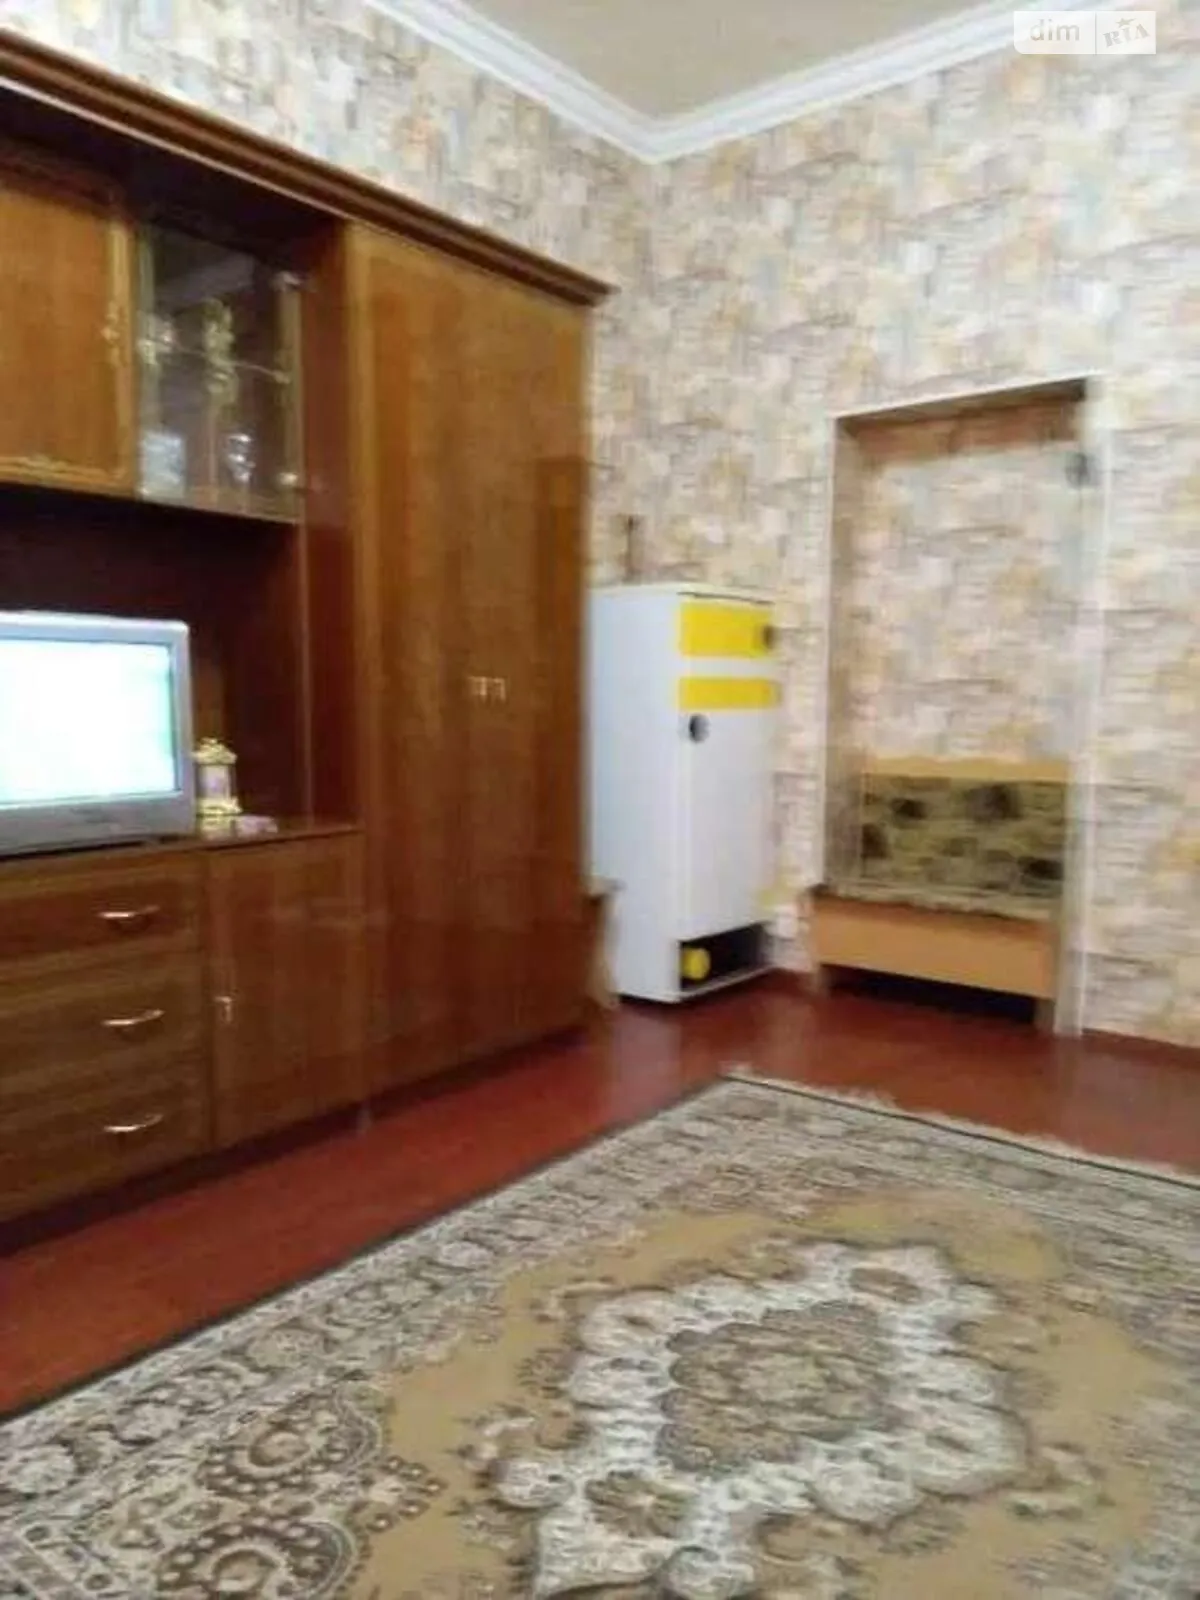 Продается комната 22 кв. м в Харькове - фото 2